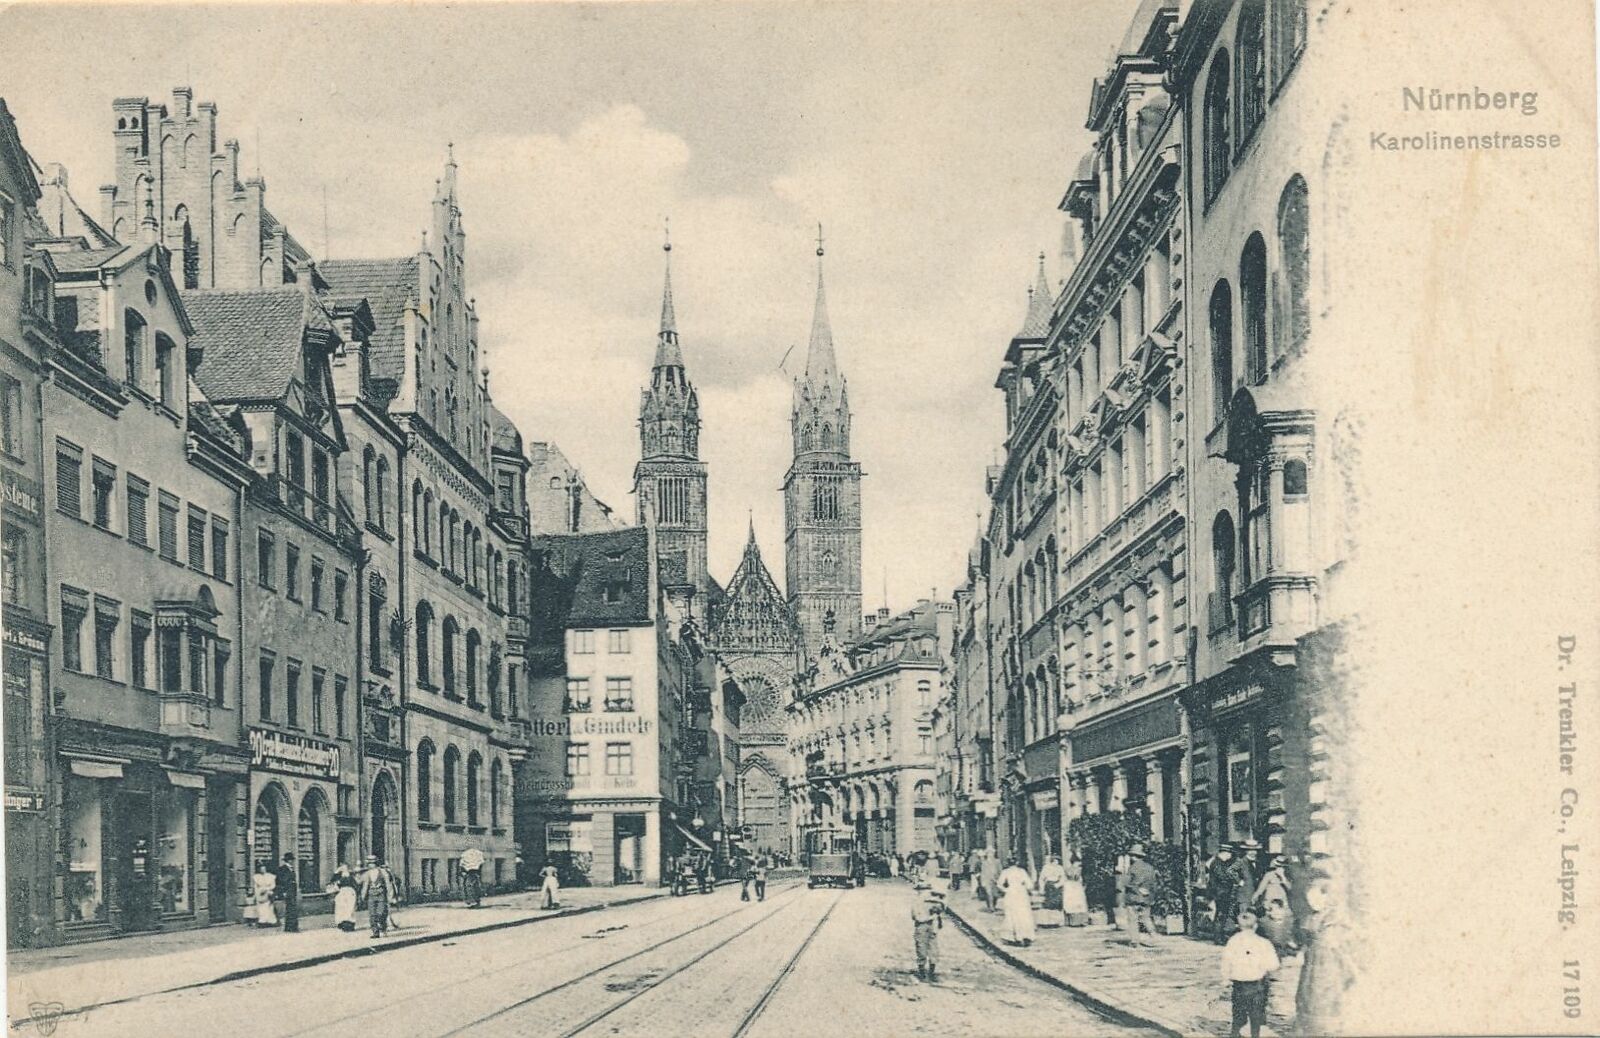 NURNBERG - Karolinenstrasse - Nuremberg - Germany - udb (pre 1908)